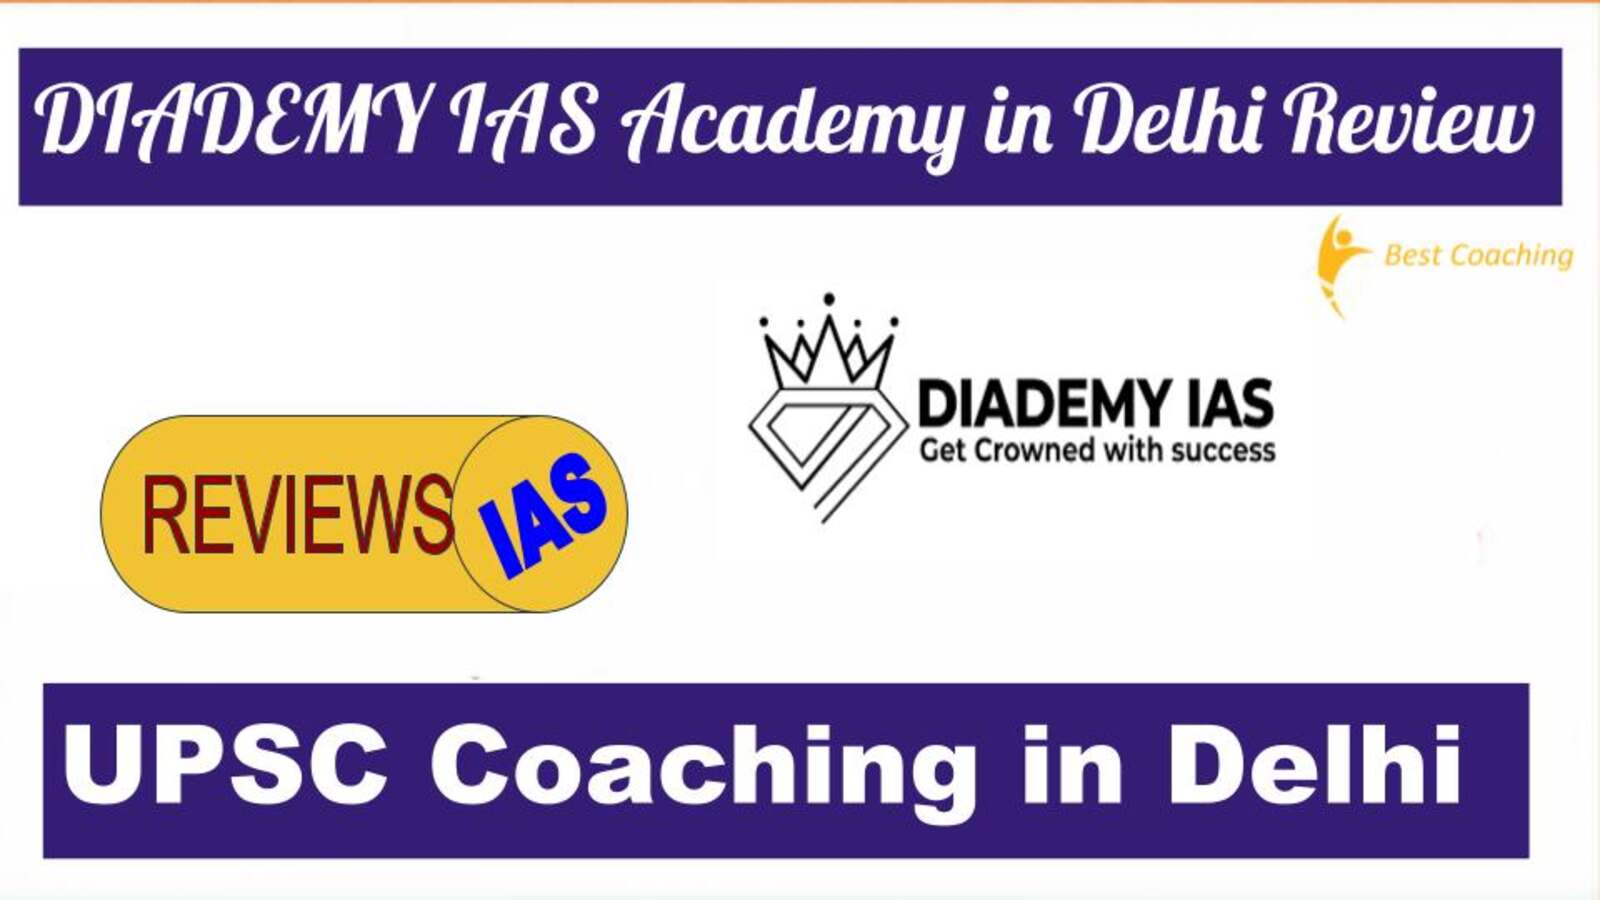 DIADEMY IAS Academy Institute in Delhi